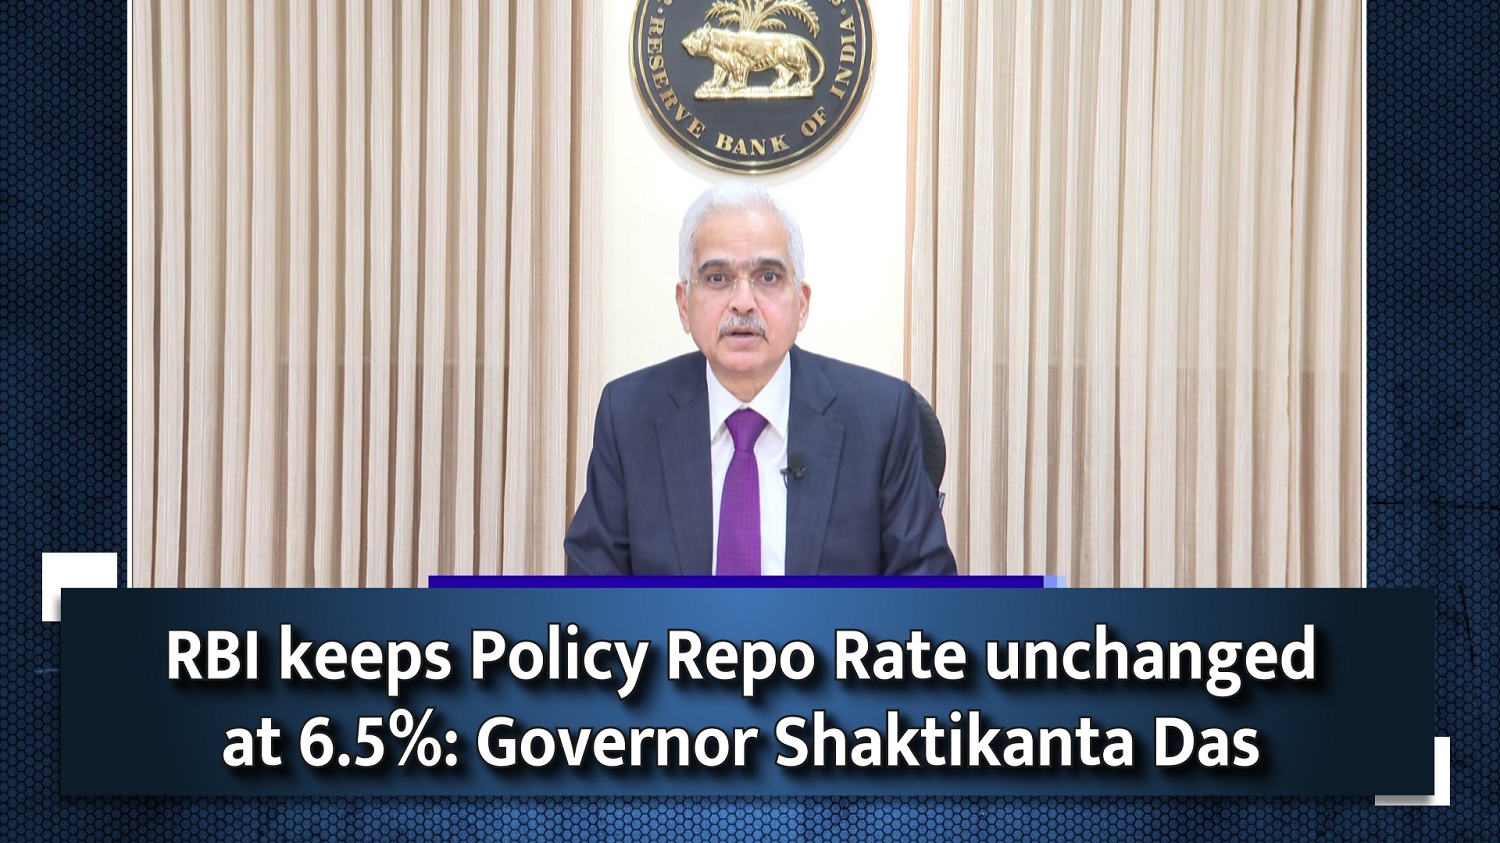 RBI keeps Policy Repo Rate unchanged at 6.5%: Governor Shaktikanta Das